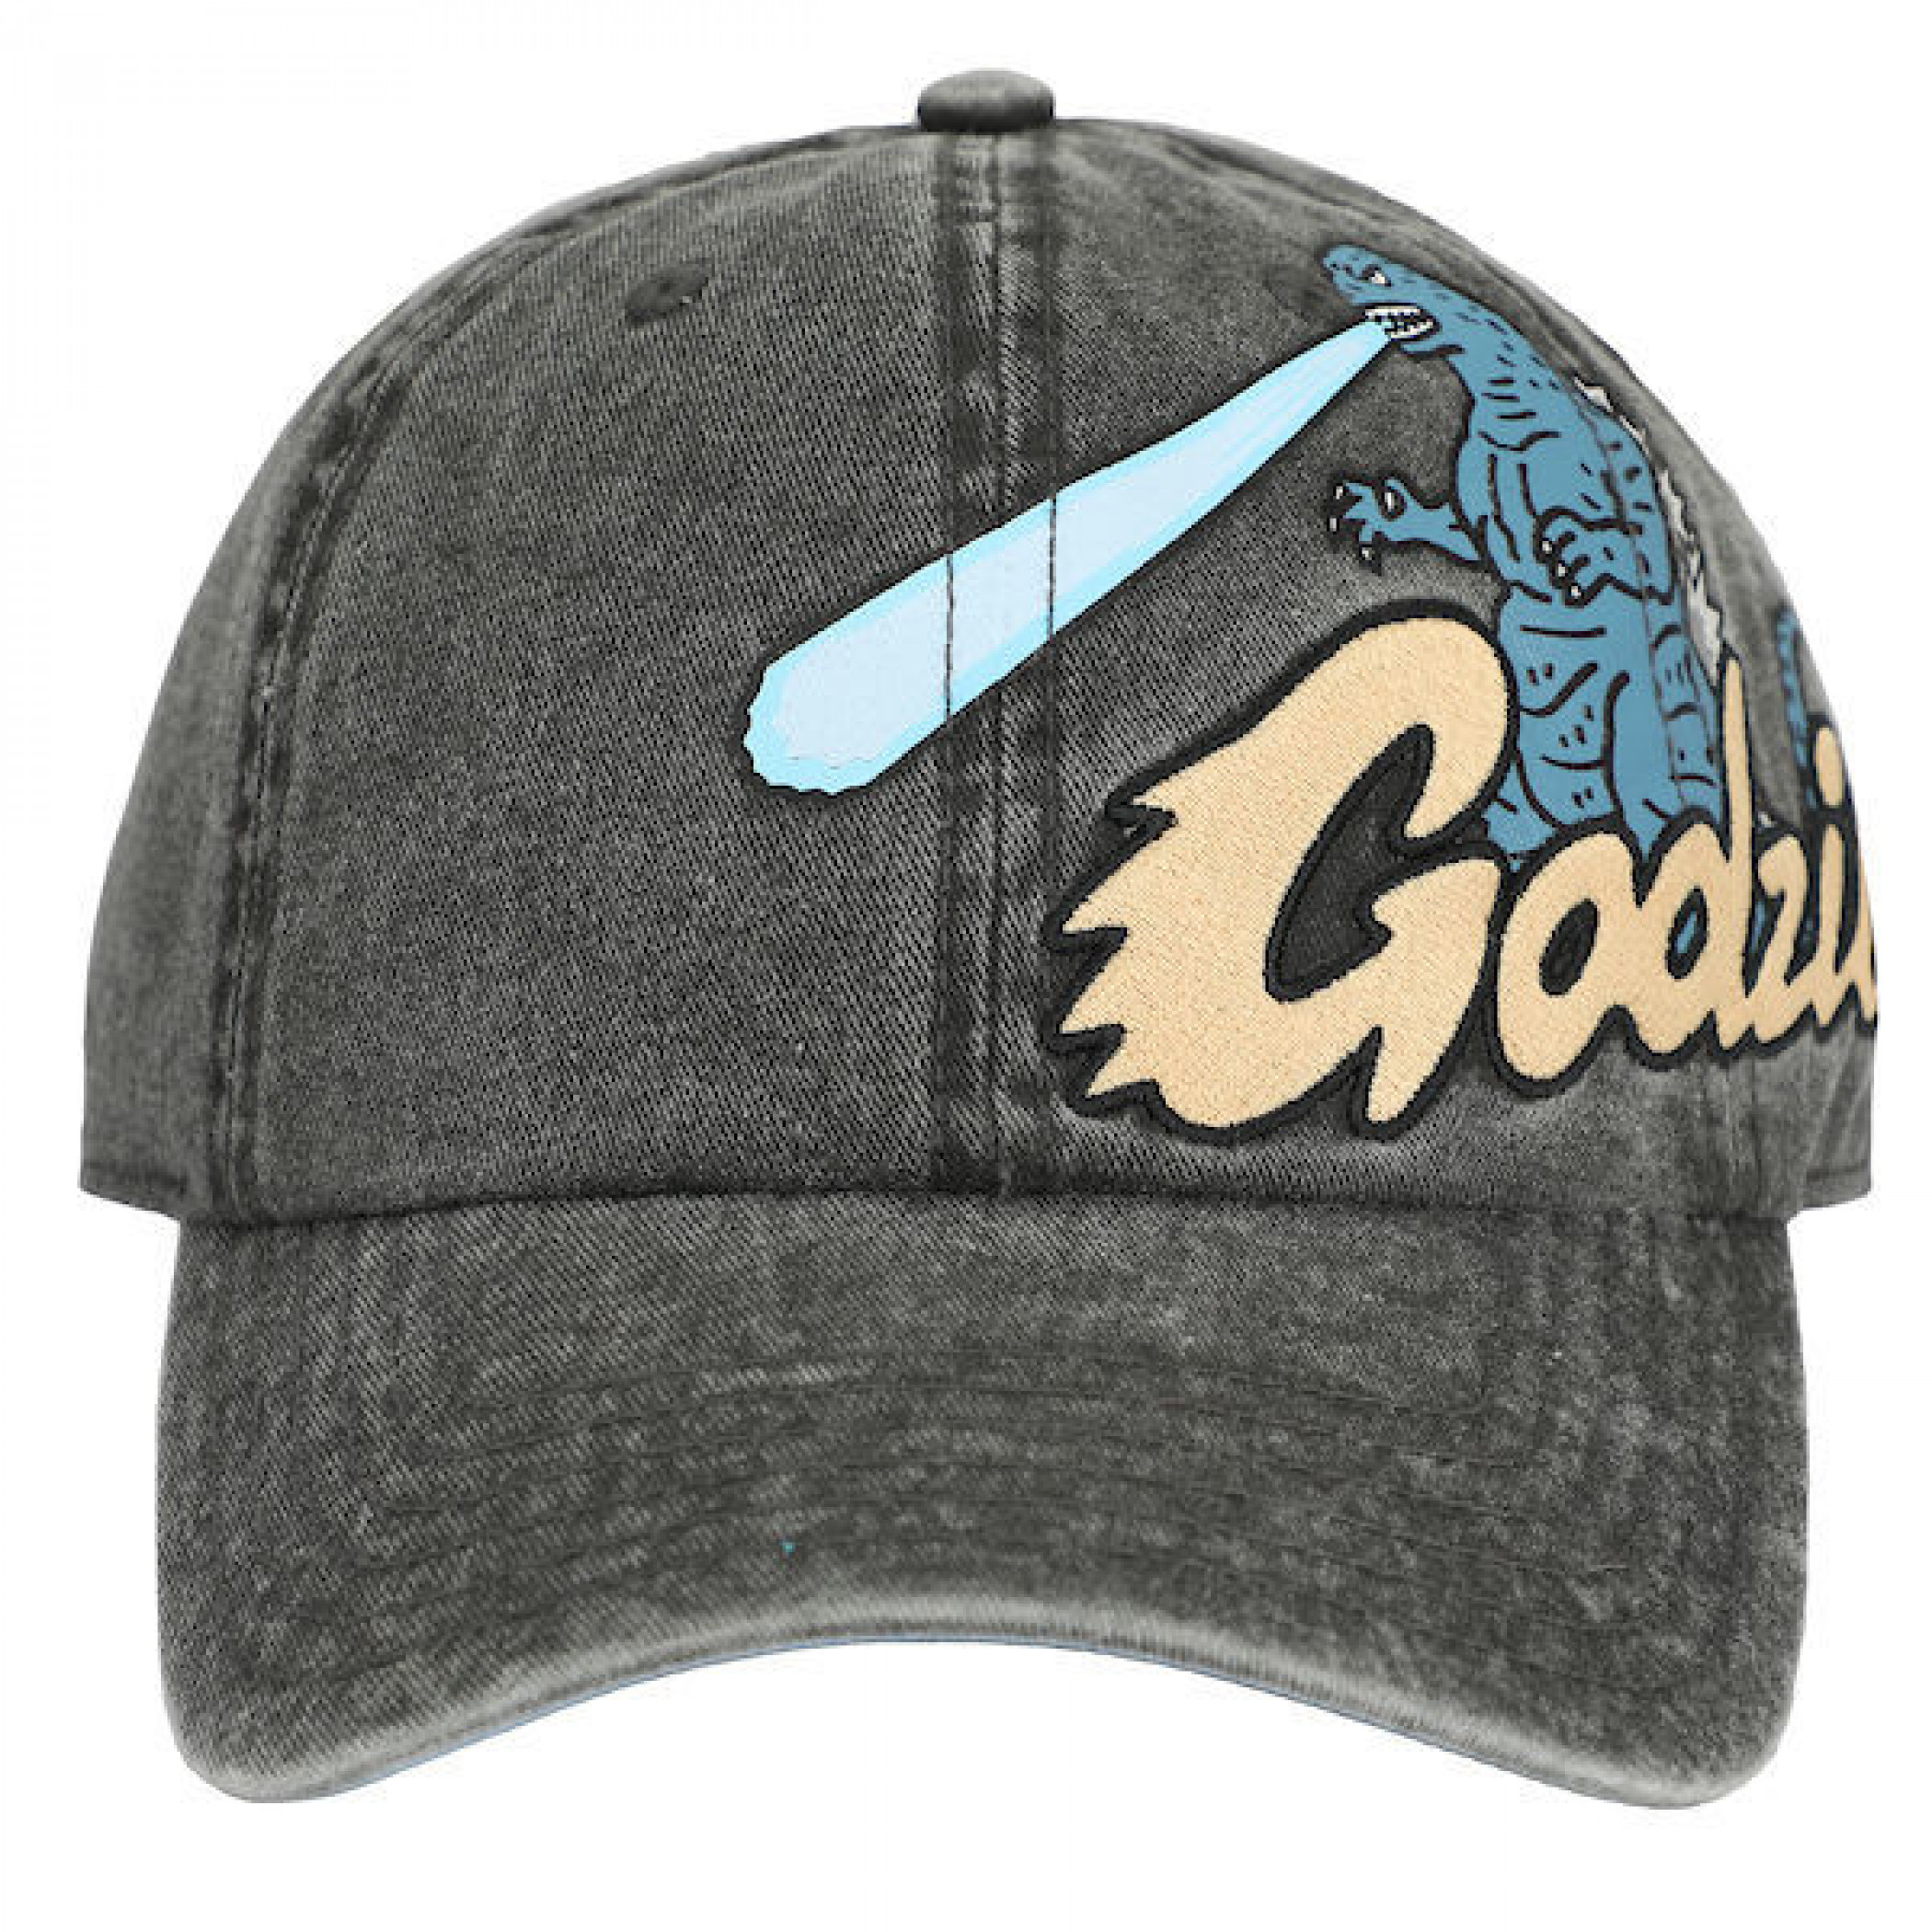 Godzilla Vs. King Ghidorah Embroidered Hat